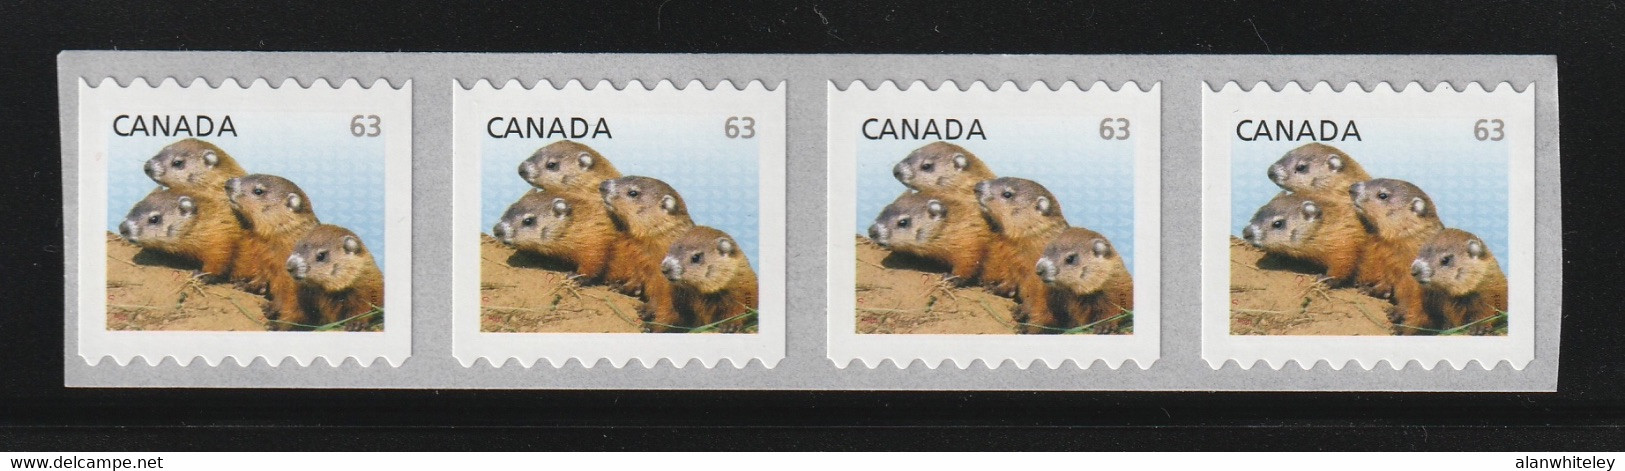 CANADA 2013 Definitives / Young Wildlife / Woodchucks 63c S/ADH: Strip Of 4 Stamps (Sideways) UM/MNH - Rollen